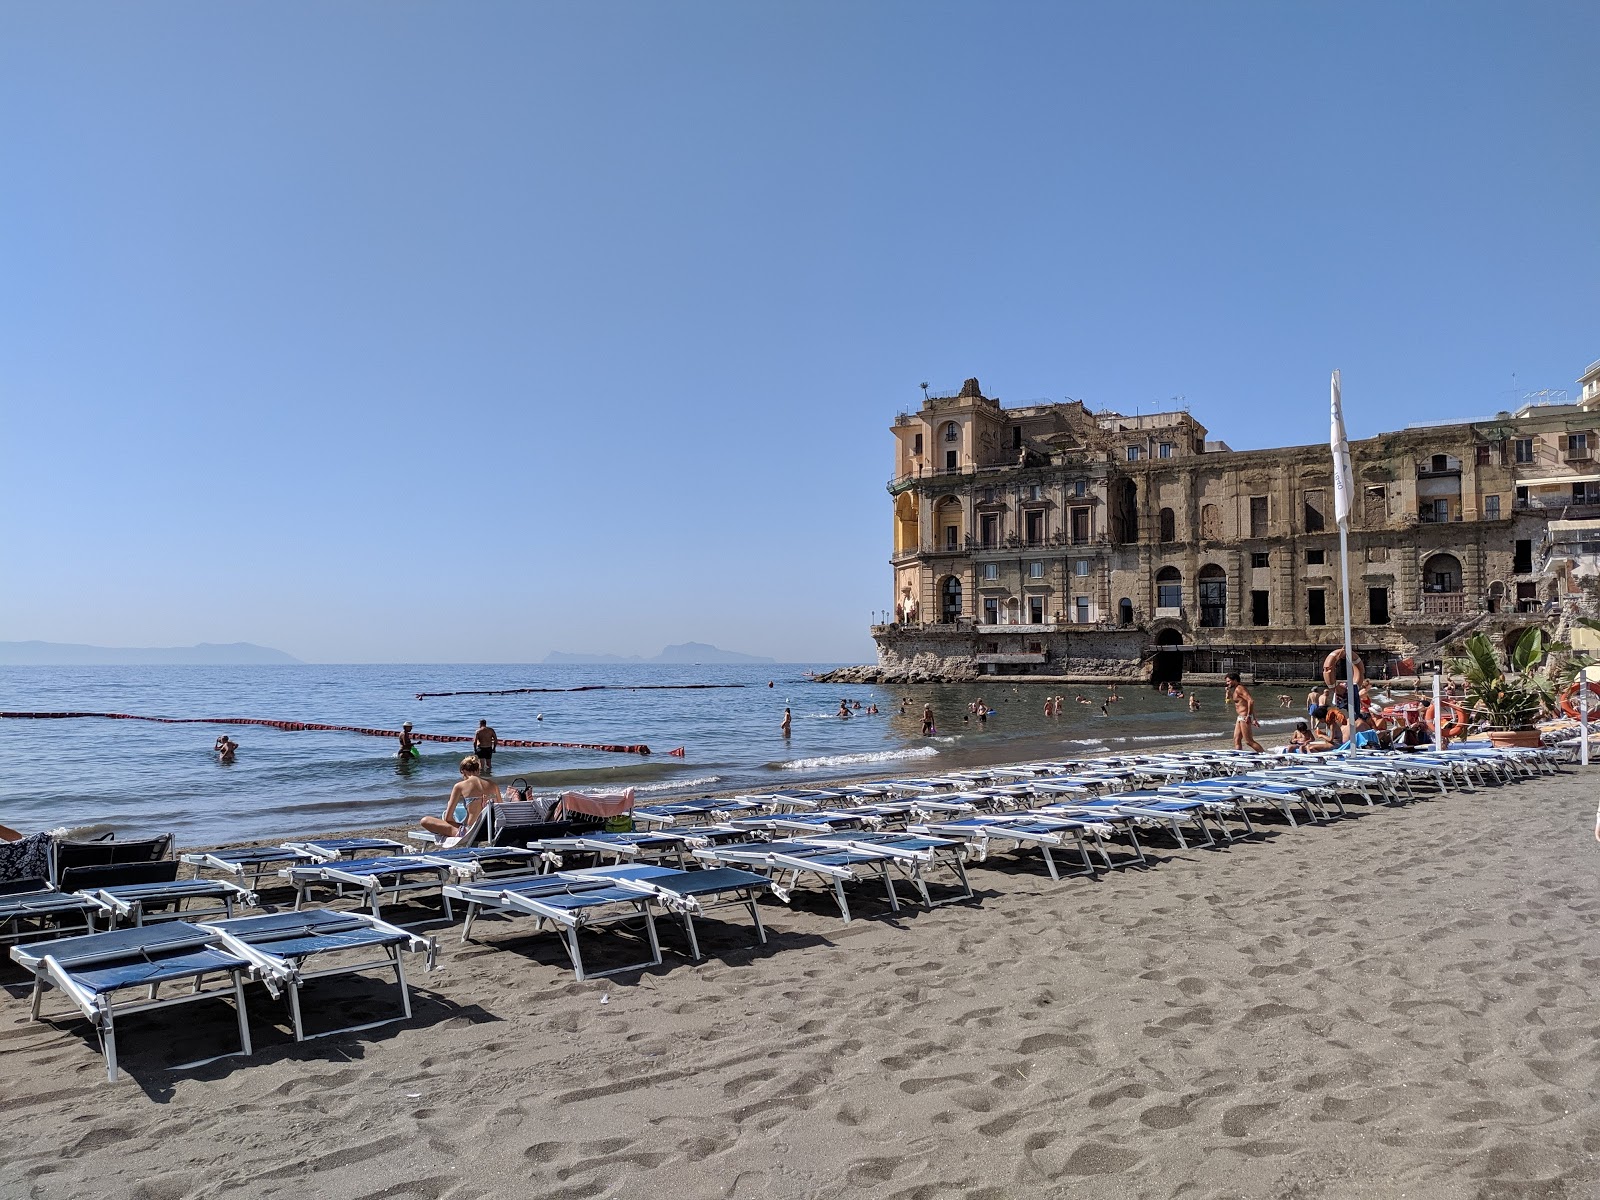 Foto van Spiaggia di via Posillipo II met gemiddeld niveau van netheid